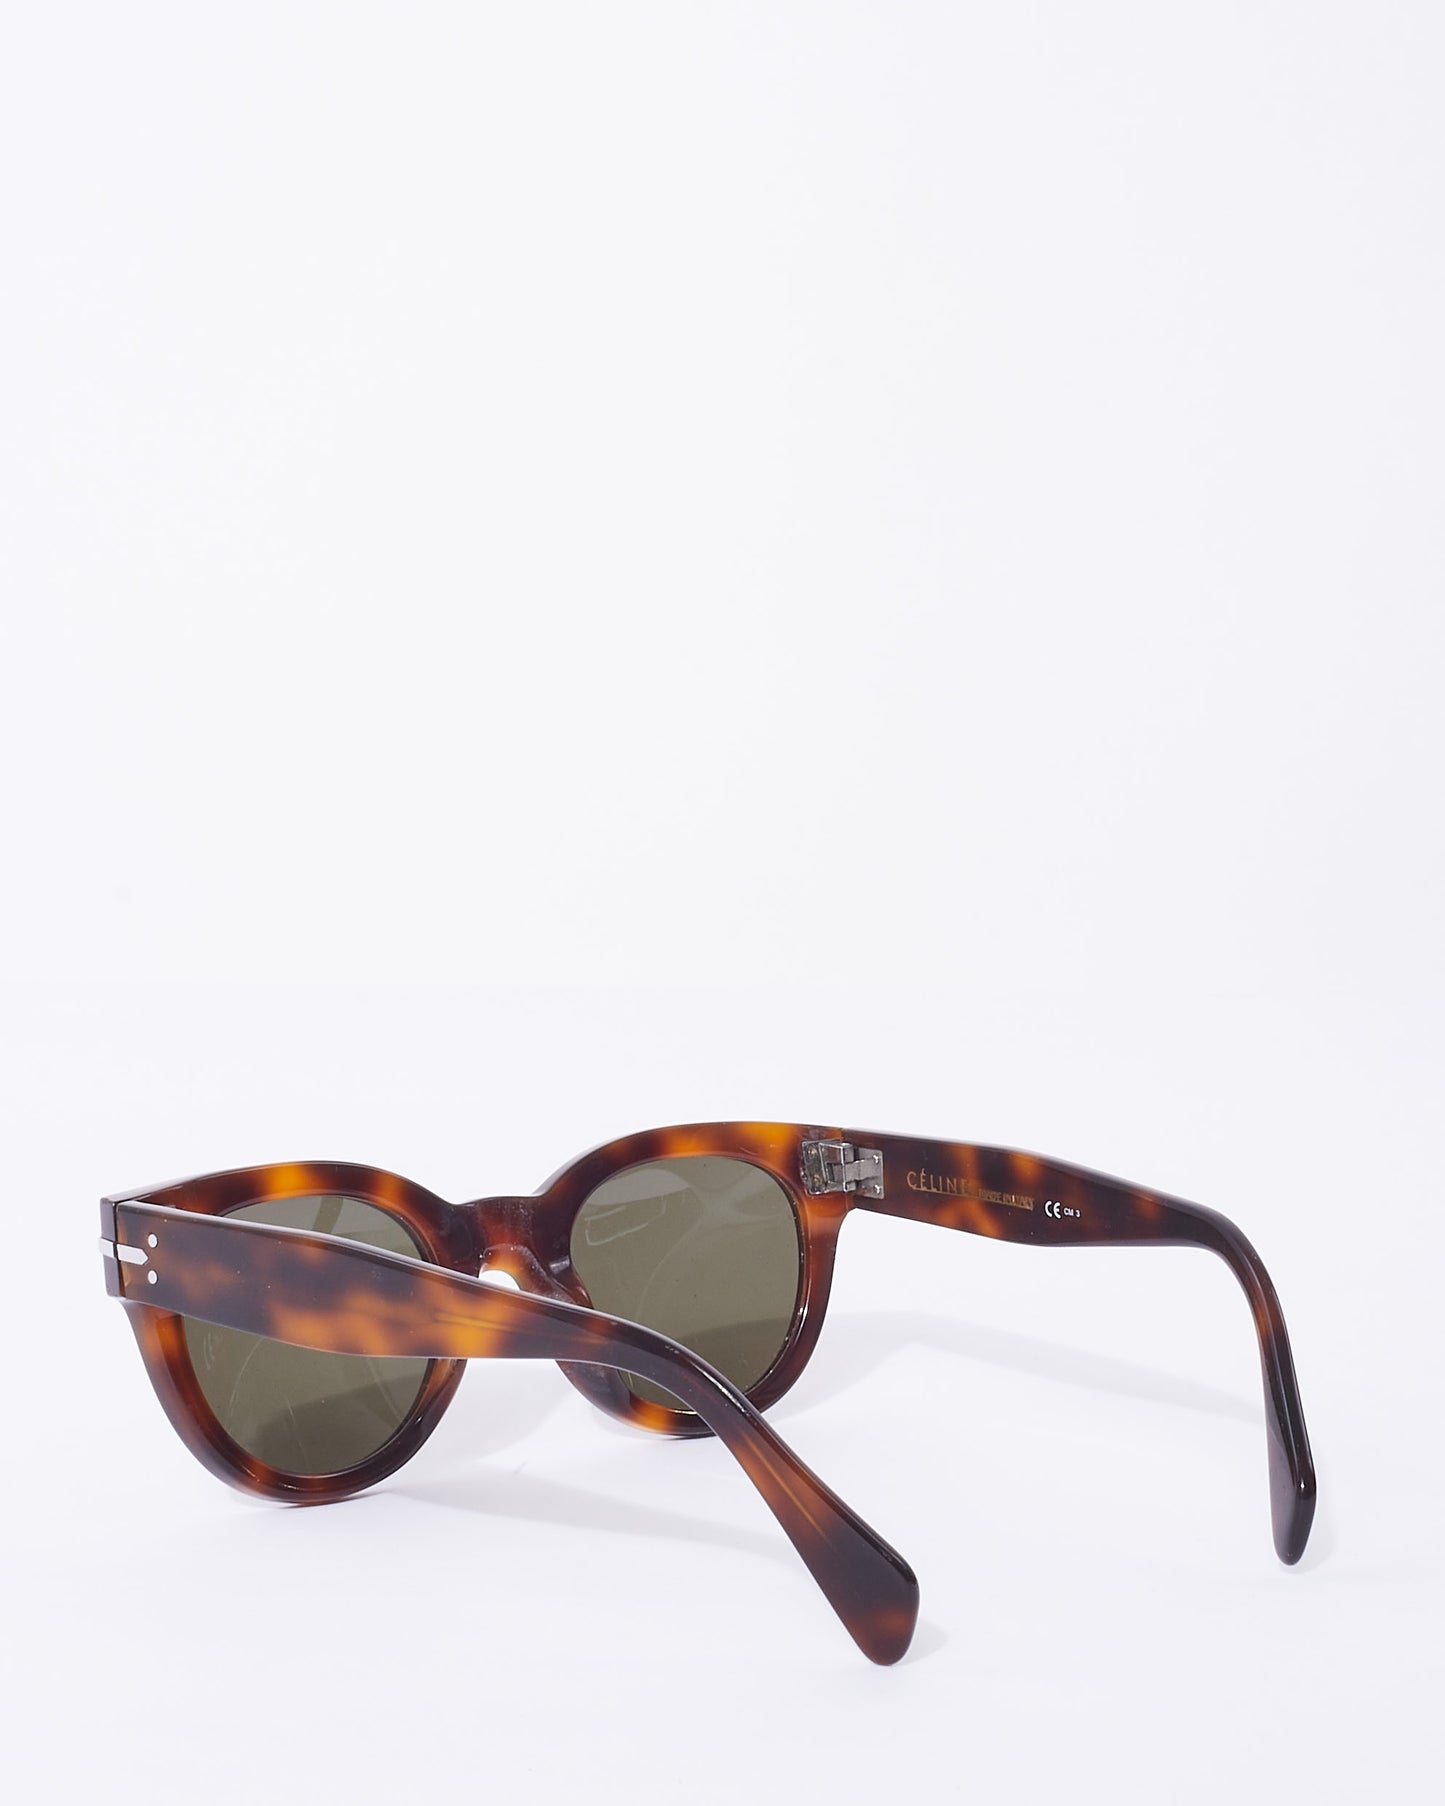 Celine Brown Tortoise CL 41040/S Round Cat Eye Sunglasses